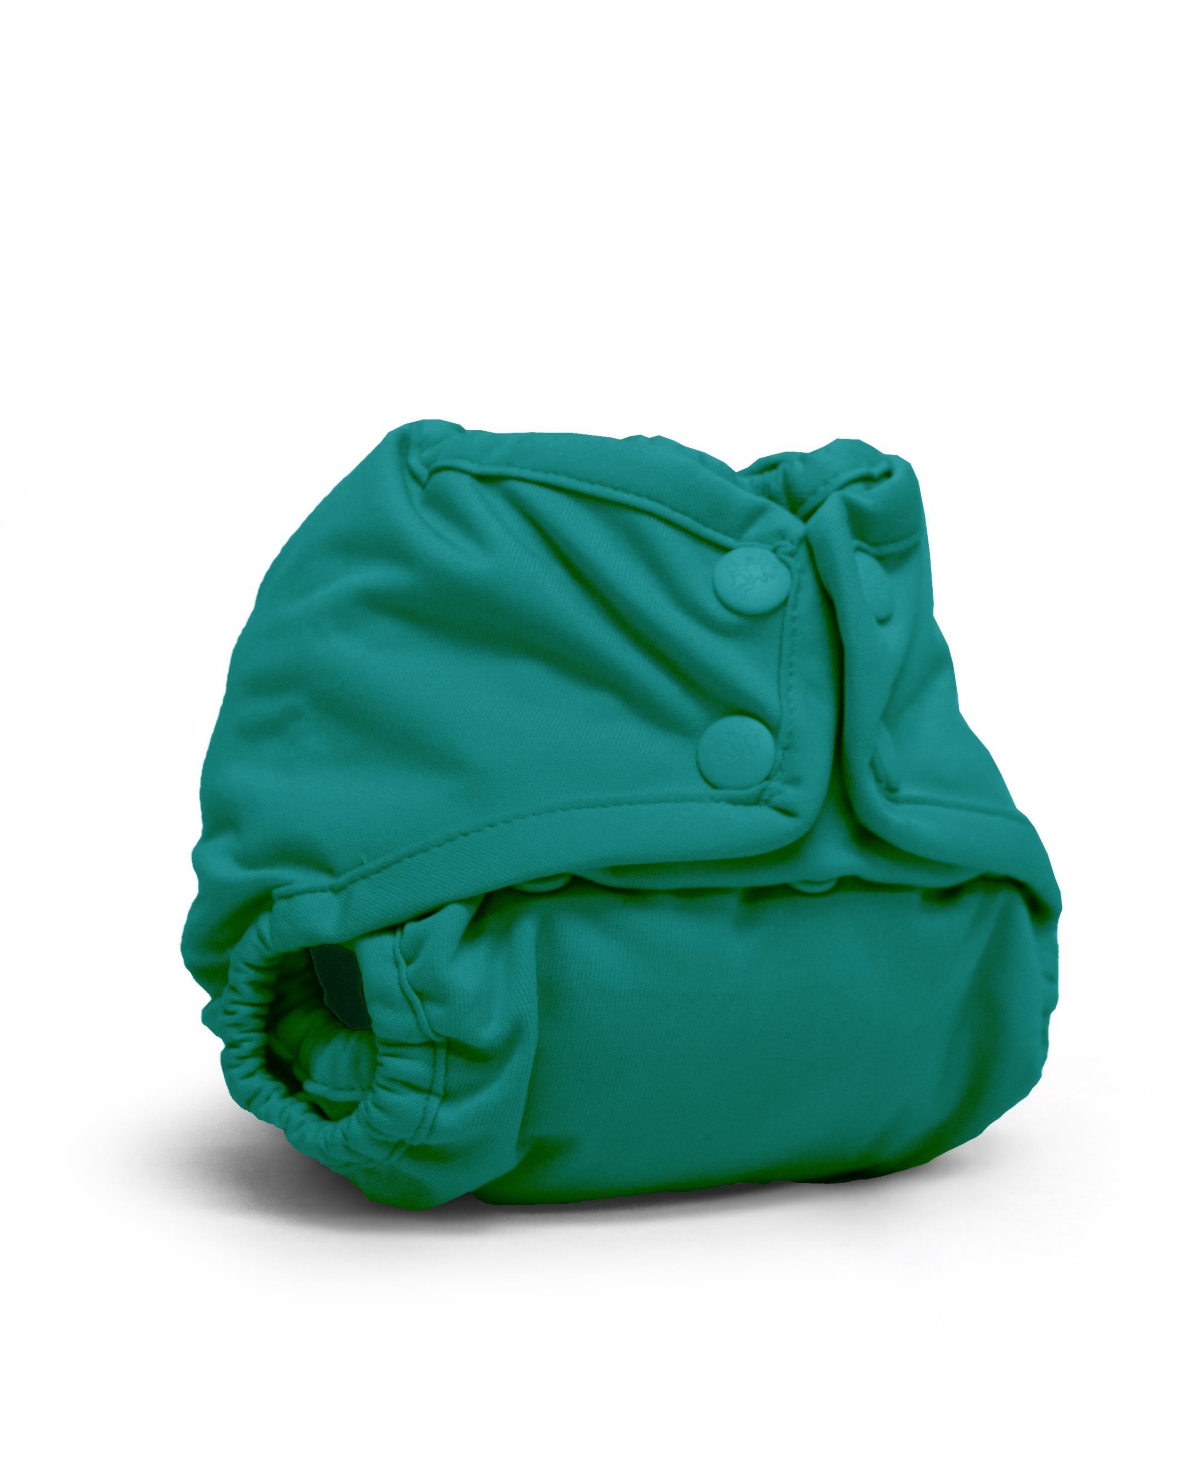 Kanga Care Babies' Rumparooz Reusable Newborn Cloth Diaper Cover Snap In Green